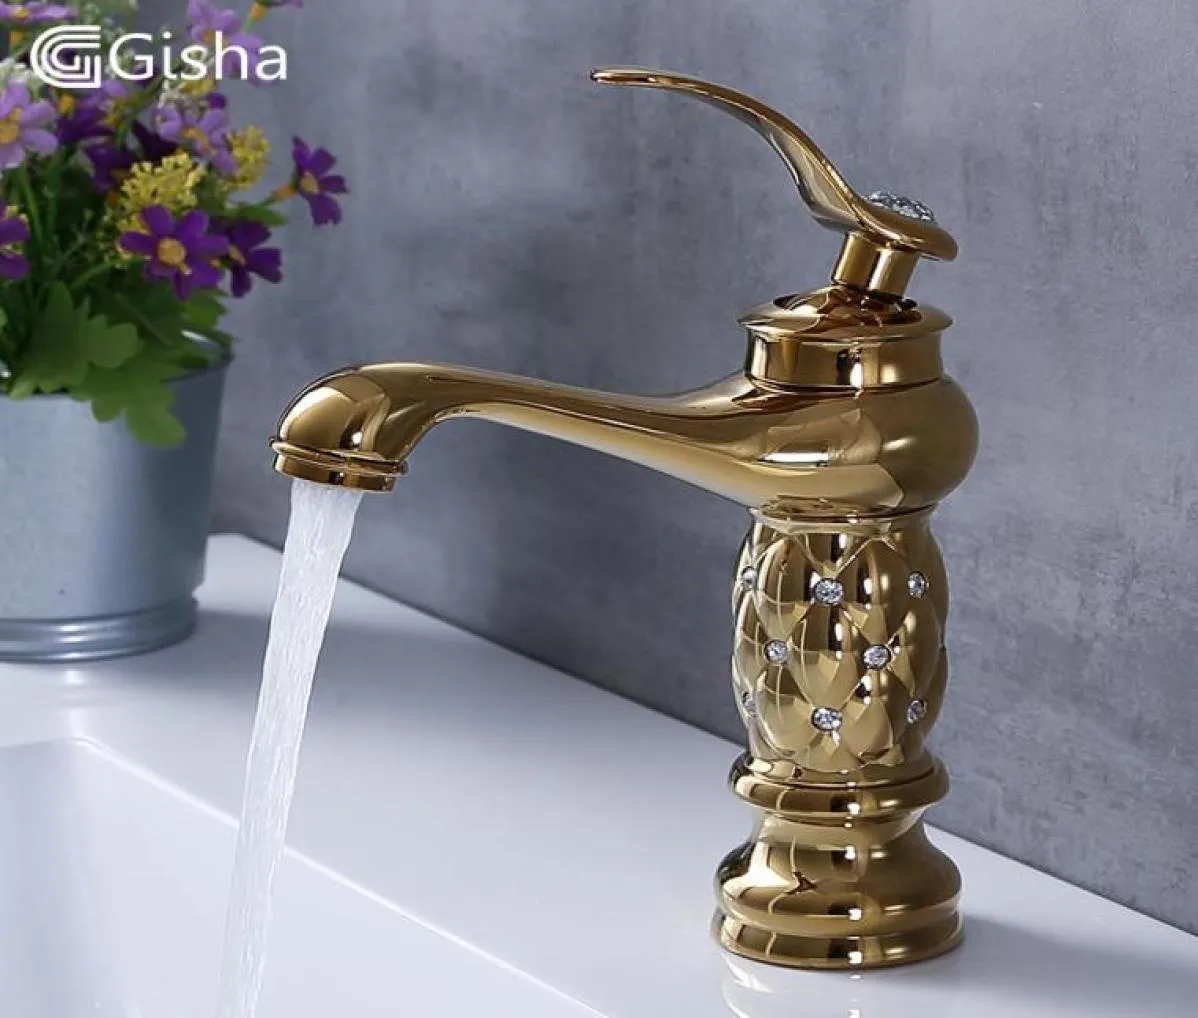 Gisha Bathrate Basin Faucets Classic Brass Diamond Faucet مقبض واحد ونقر بارد Gold Crystal Mixer Faucets T2008370016